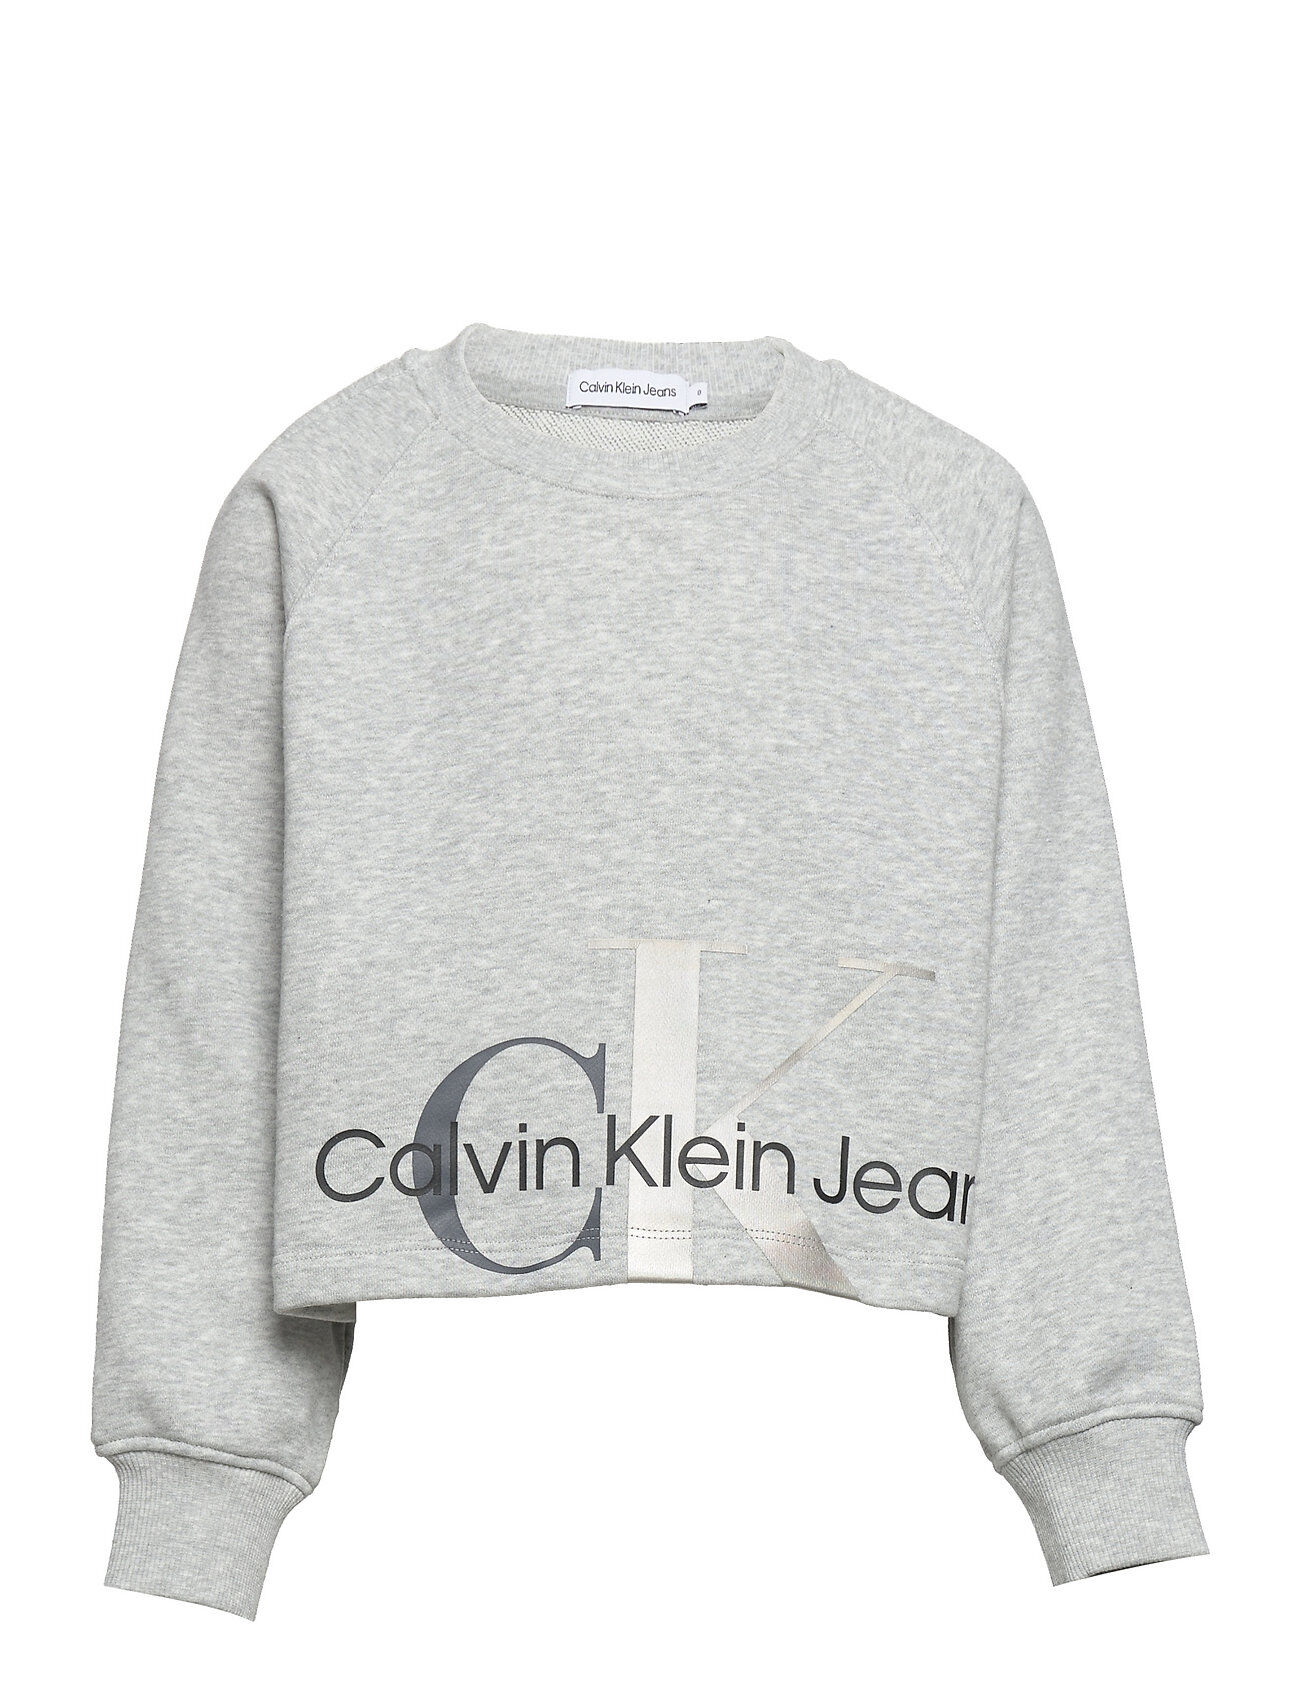 Calvin Mixed Monogram Cutoff Sweatshirt Sweat-shirt Genser Grå Calvin Klein